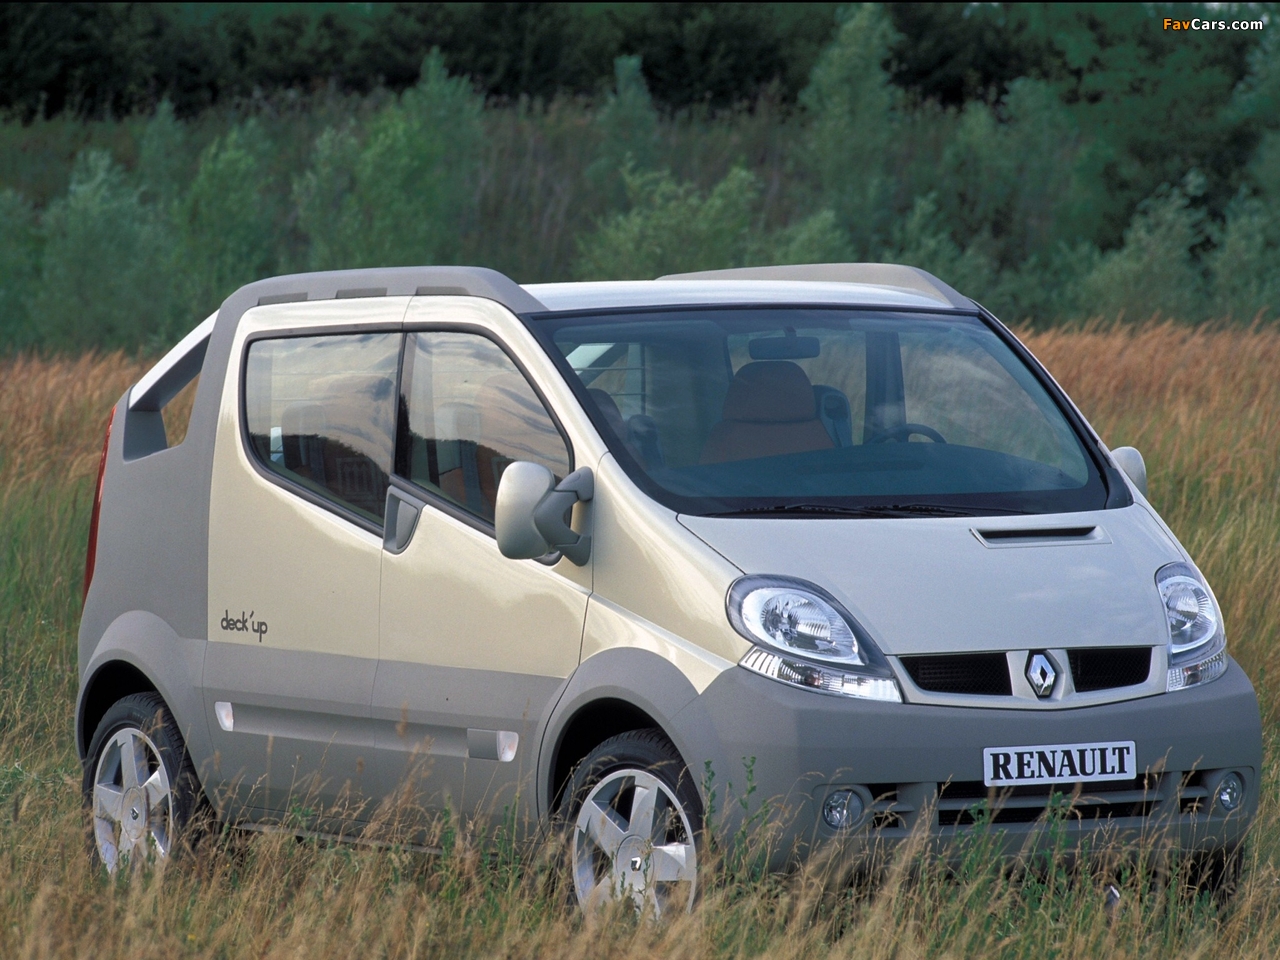 Renault Trafic Deckup Concept 2004 pictures (1280 x 960)